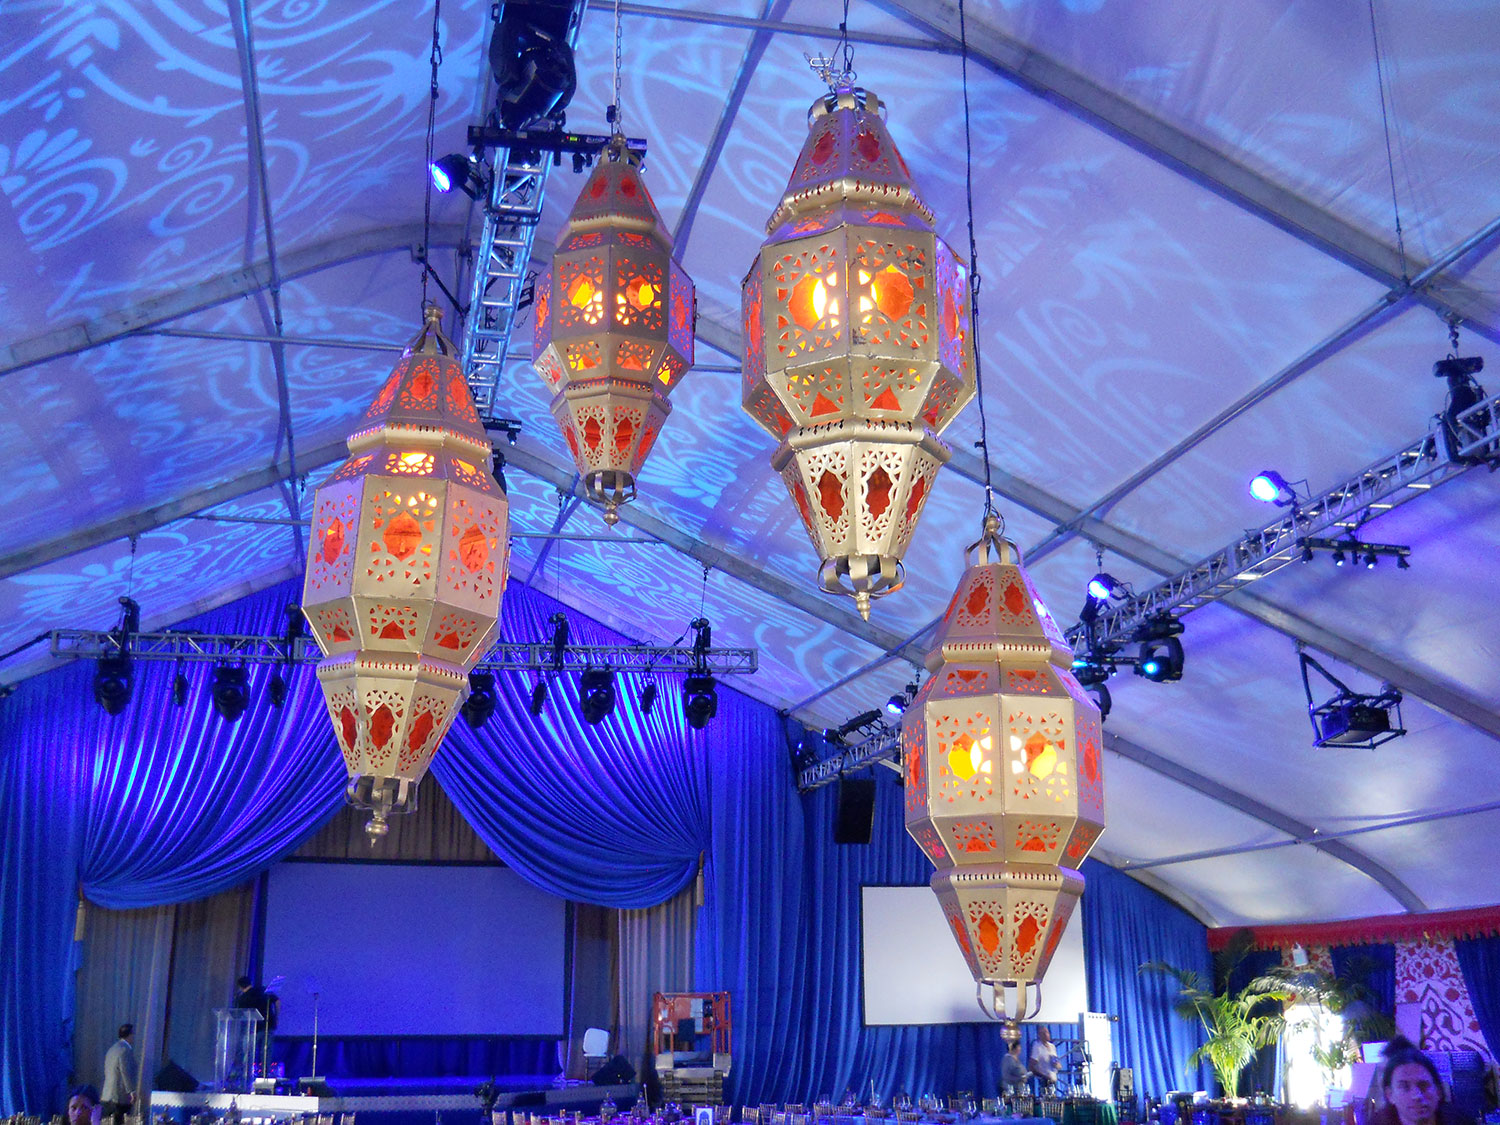 raj-tents-lighting-ajmers-large-tent.jpg